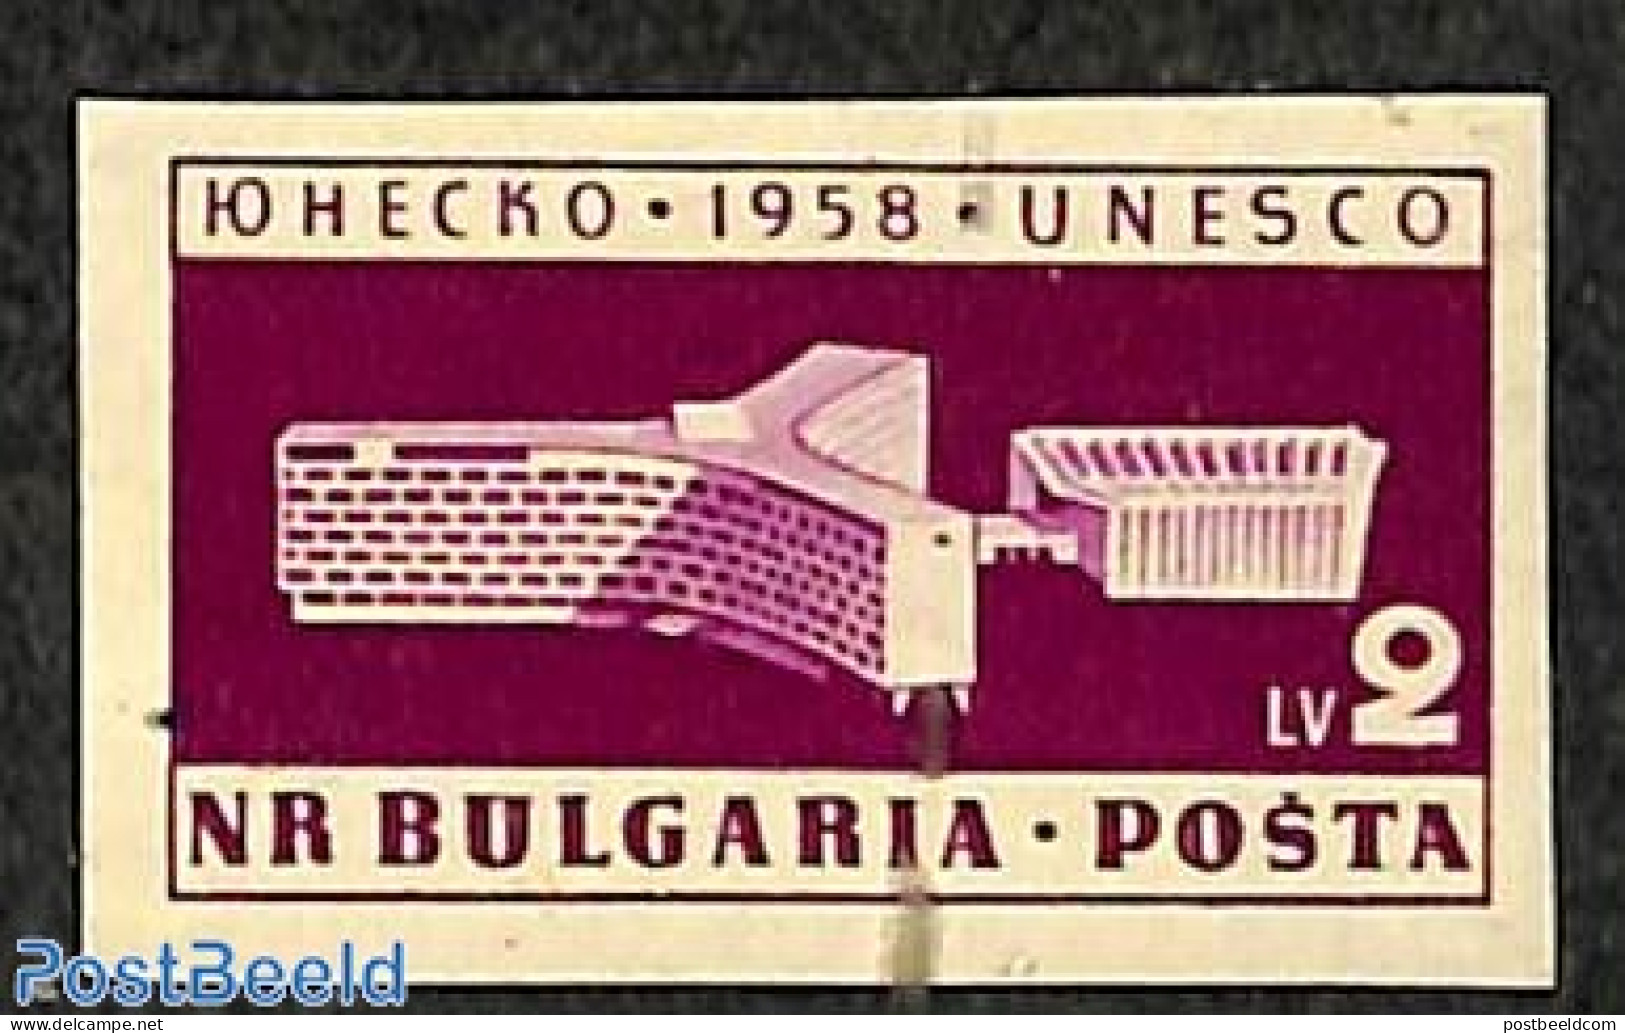 Bulgaria 1959 UNESCO 1v Imperforated, Mint NH, History - Unesco - Ongebruikt